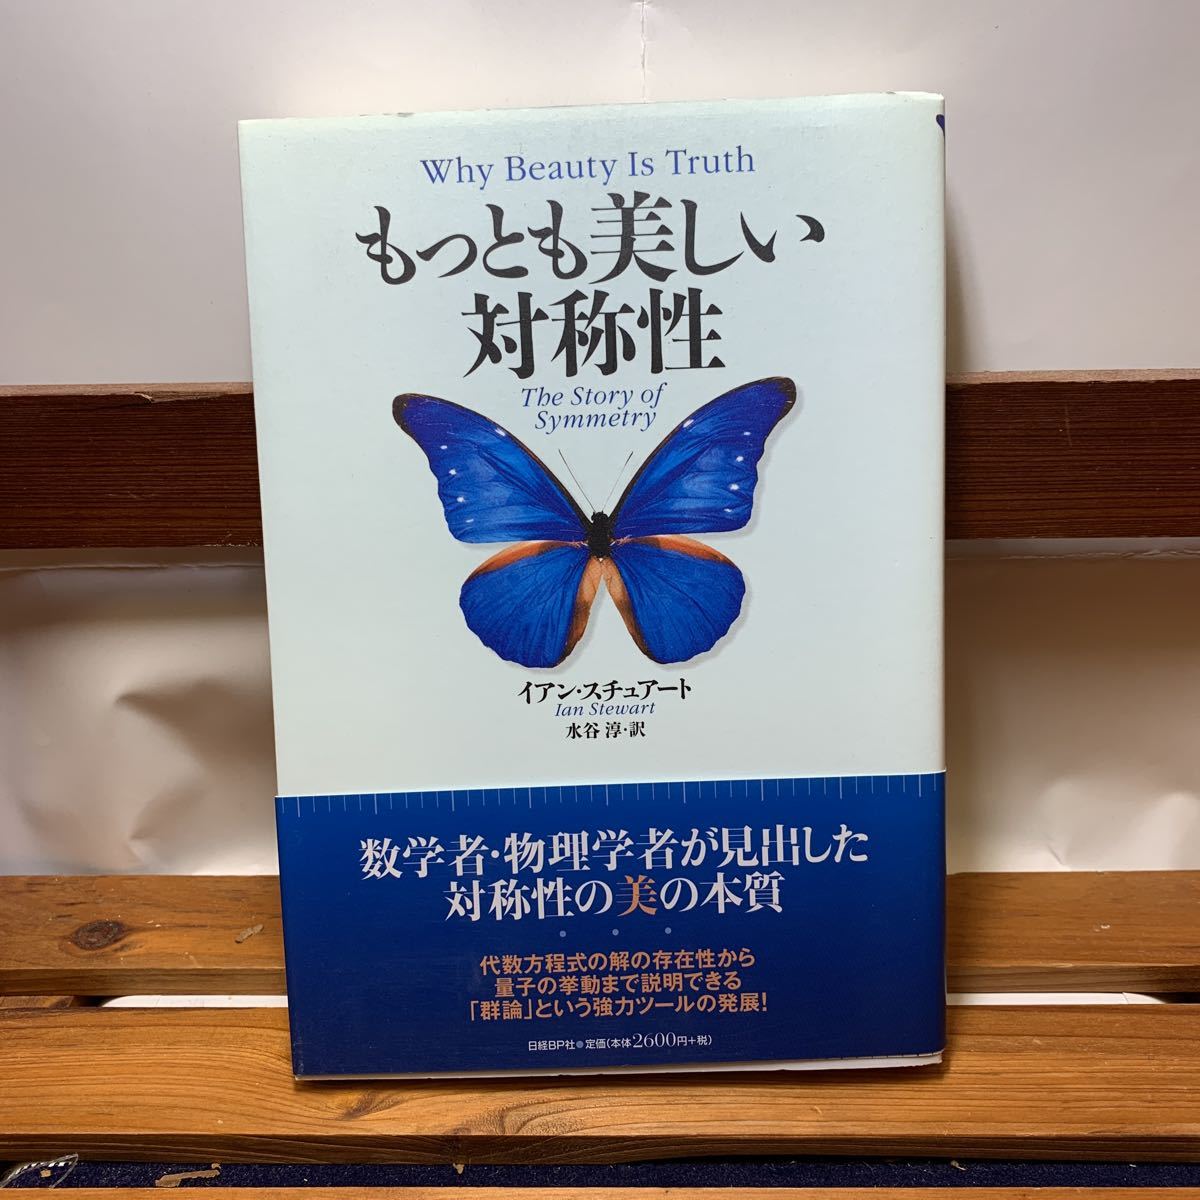 * Osaka Sakai city / receipt possible * most beautiful against .. Ian * Stuart Nikkei BP company obi attaching secondhand book old book *